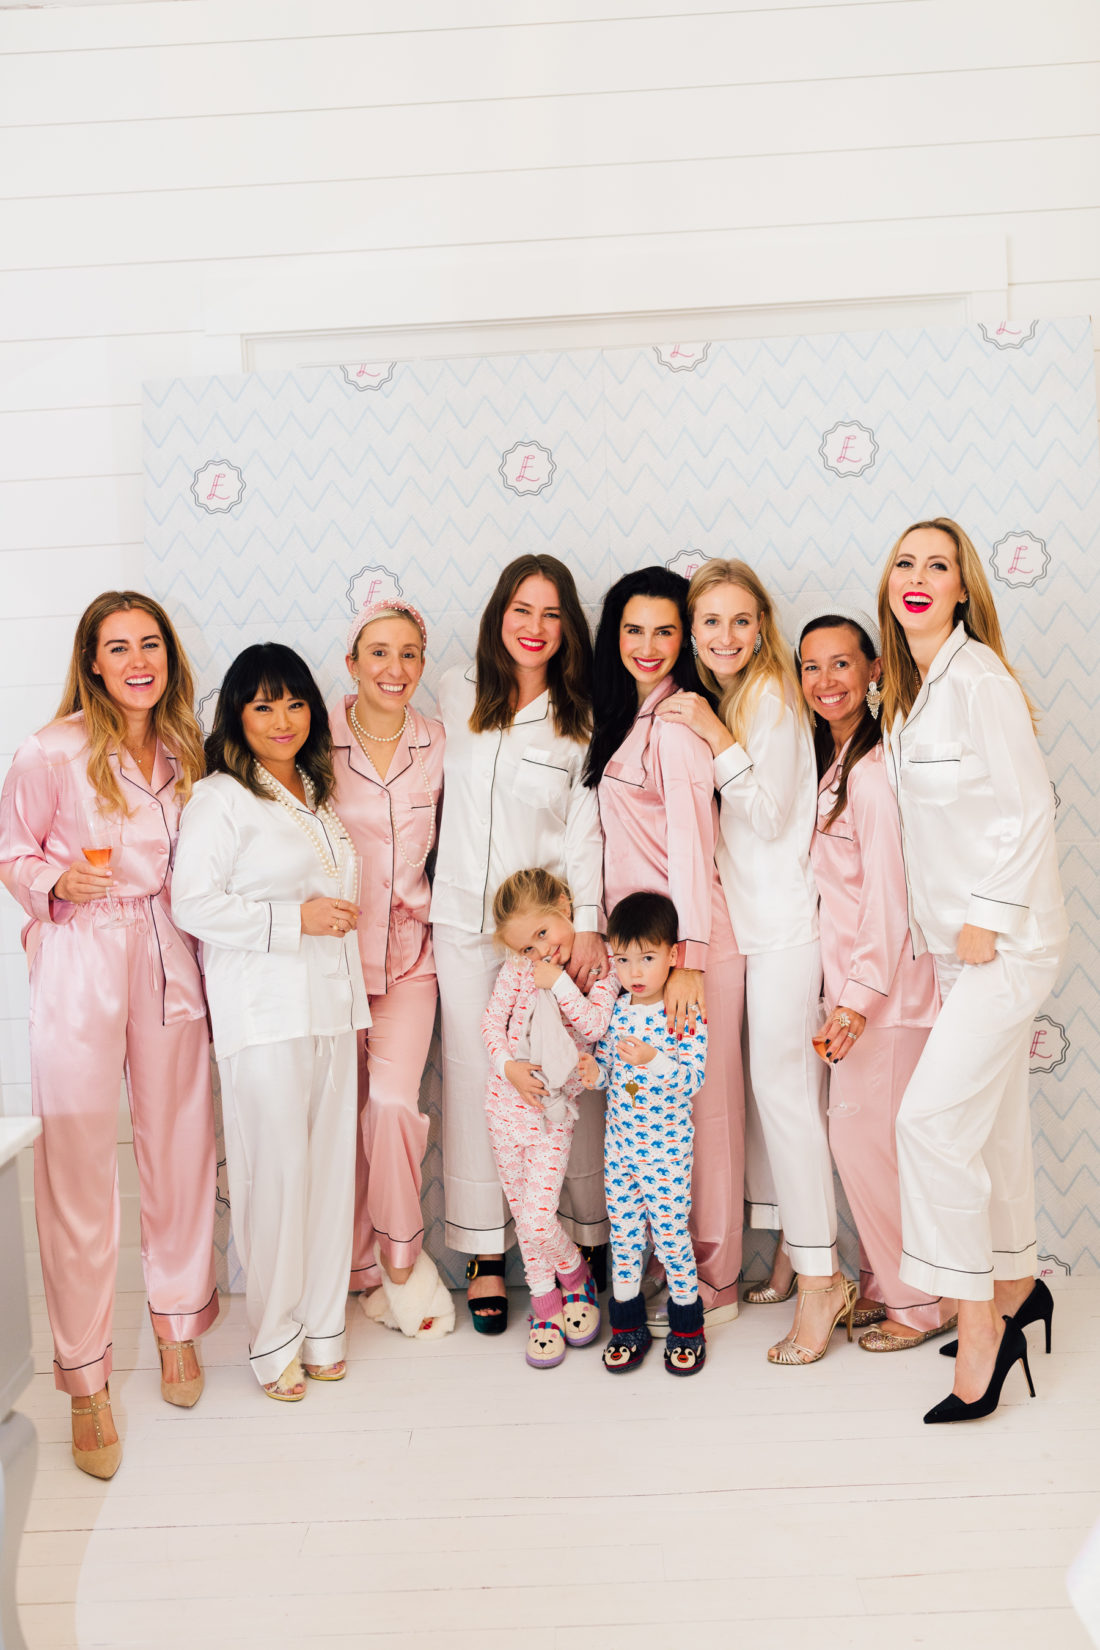 Eva Amurri poses with her girlfriends in their matching silk pajamas